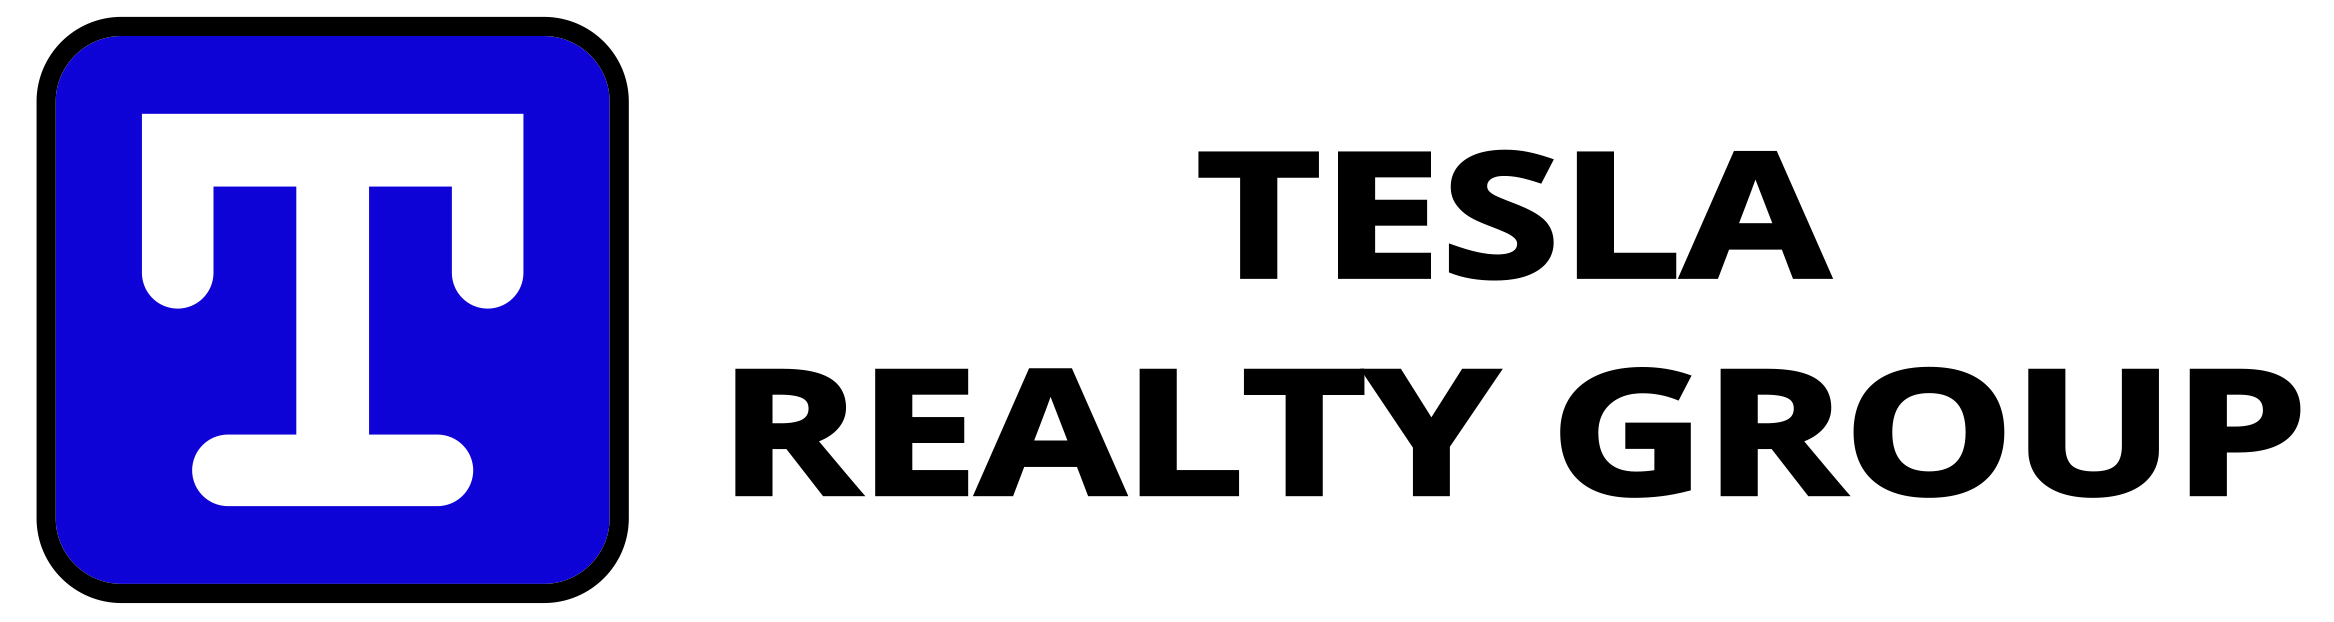 Tesla Realty Group 